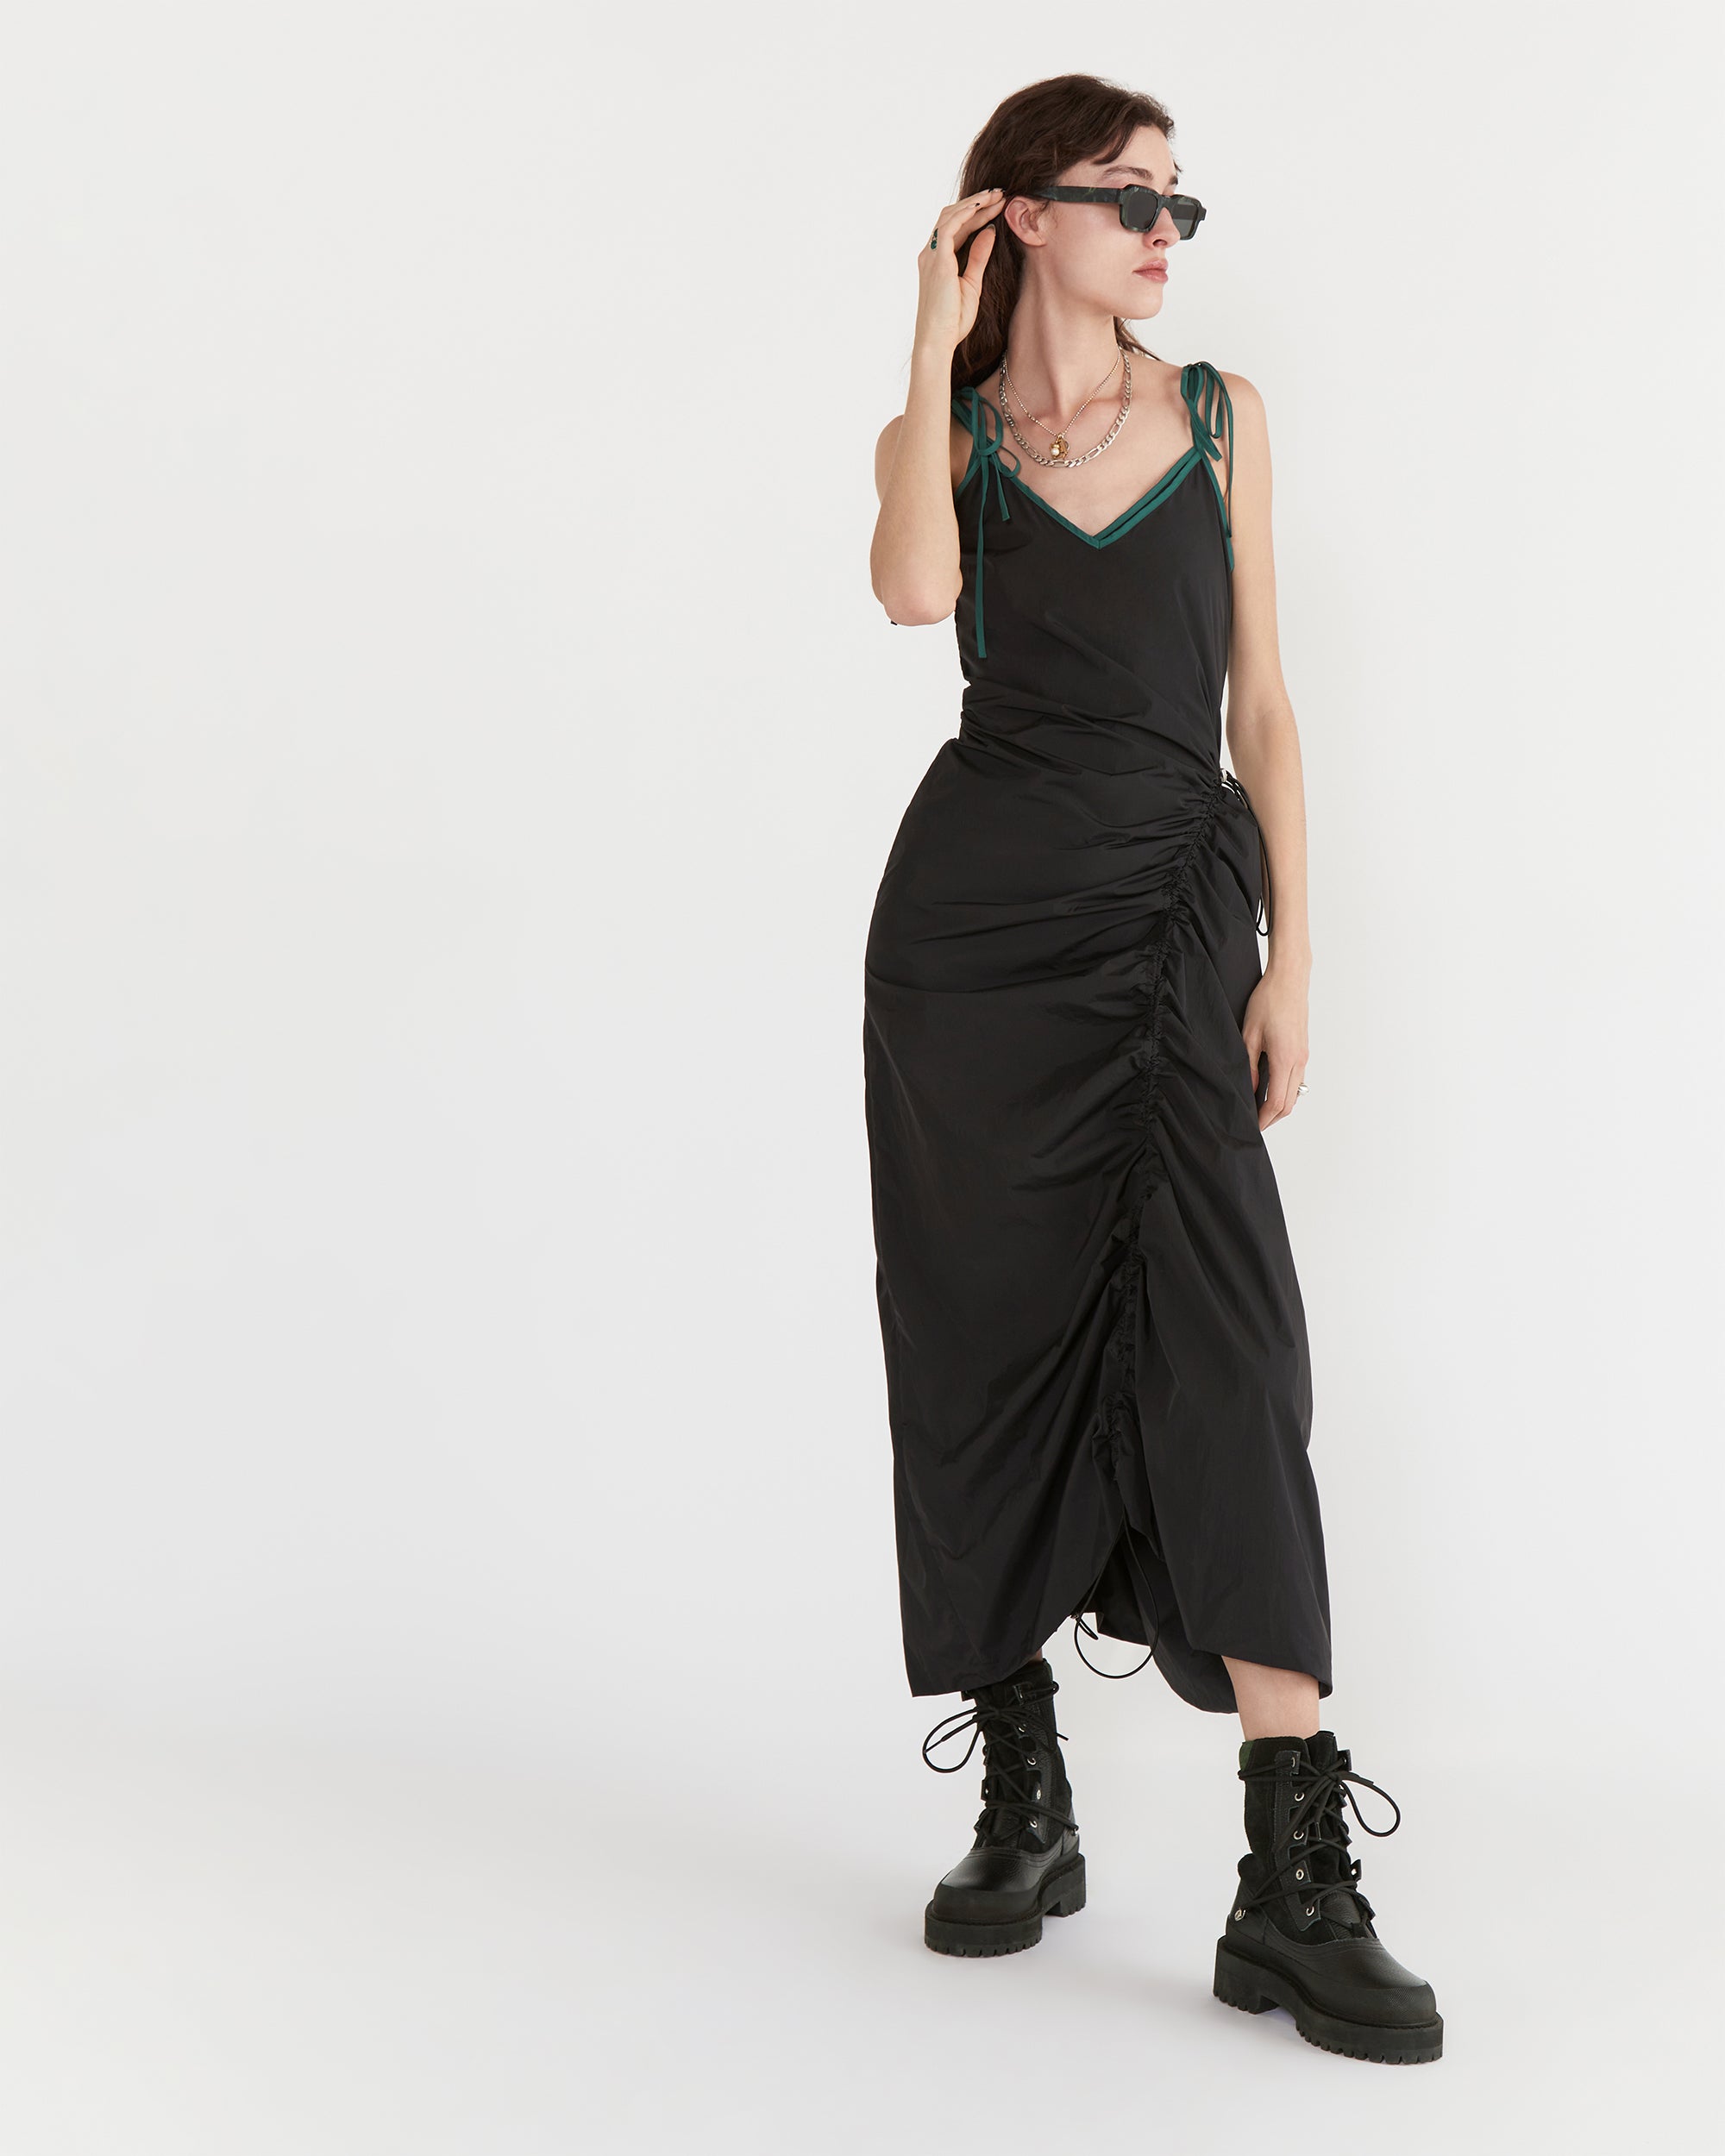 Cinched Nylon Asymmetrical Dress in Black